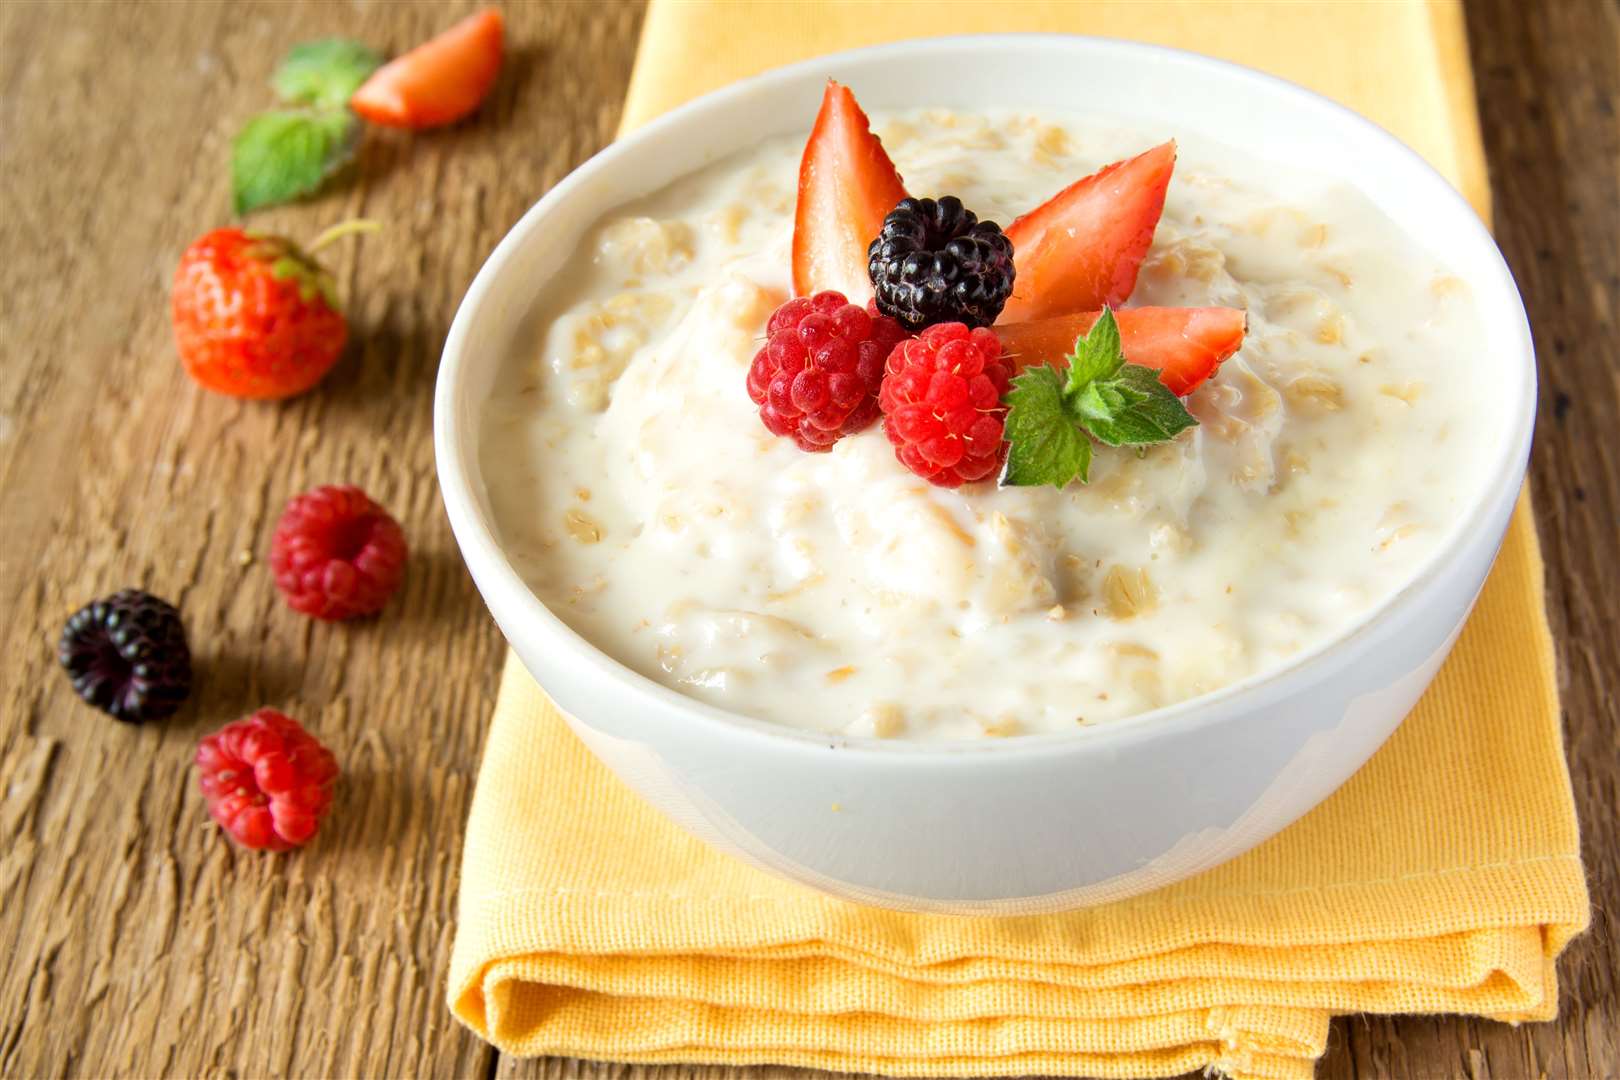 Oatmeal porridge with berries.